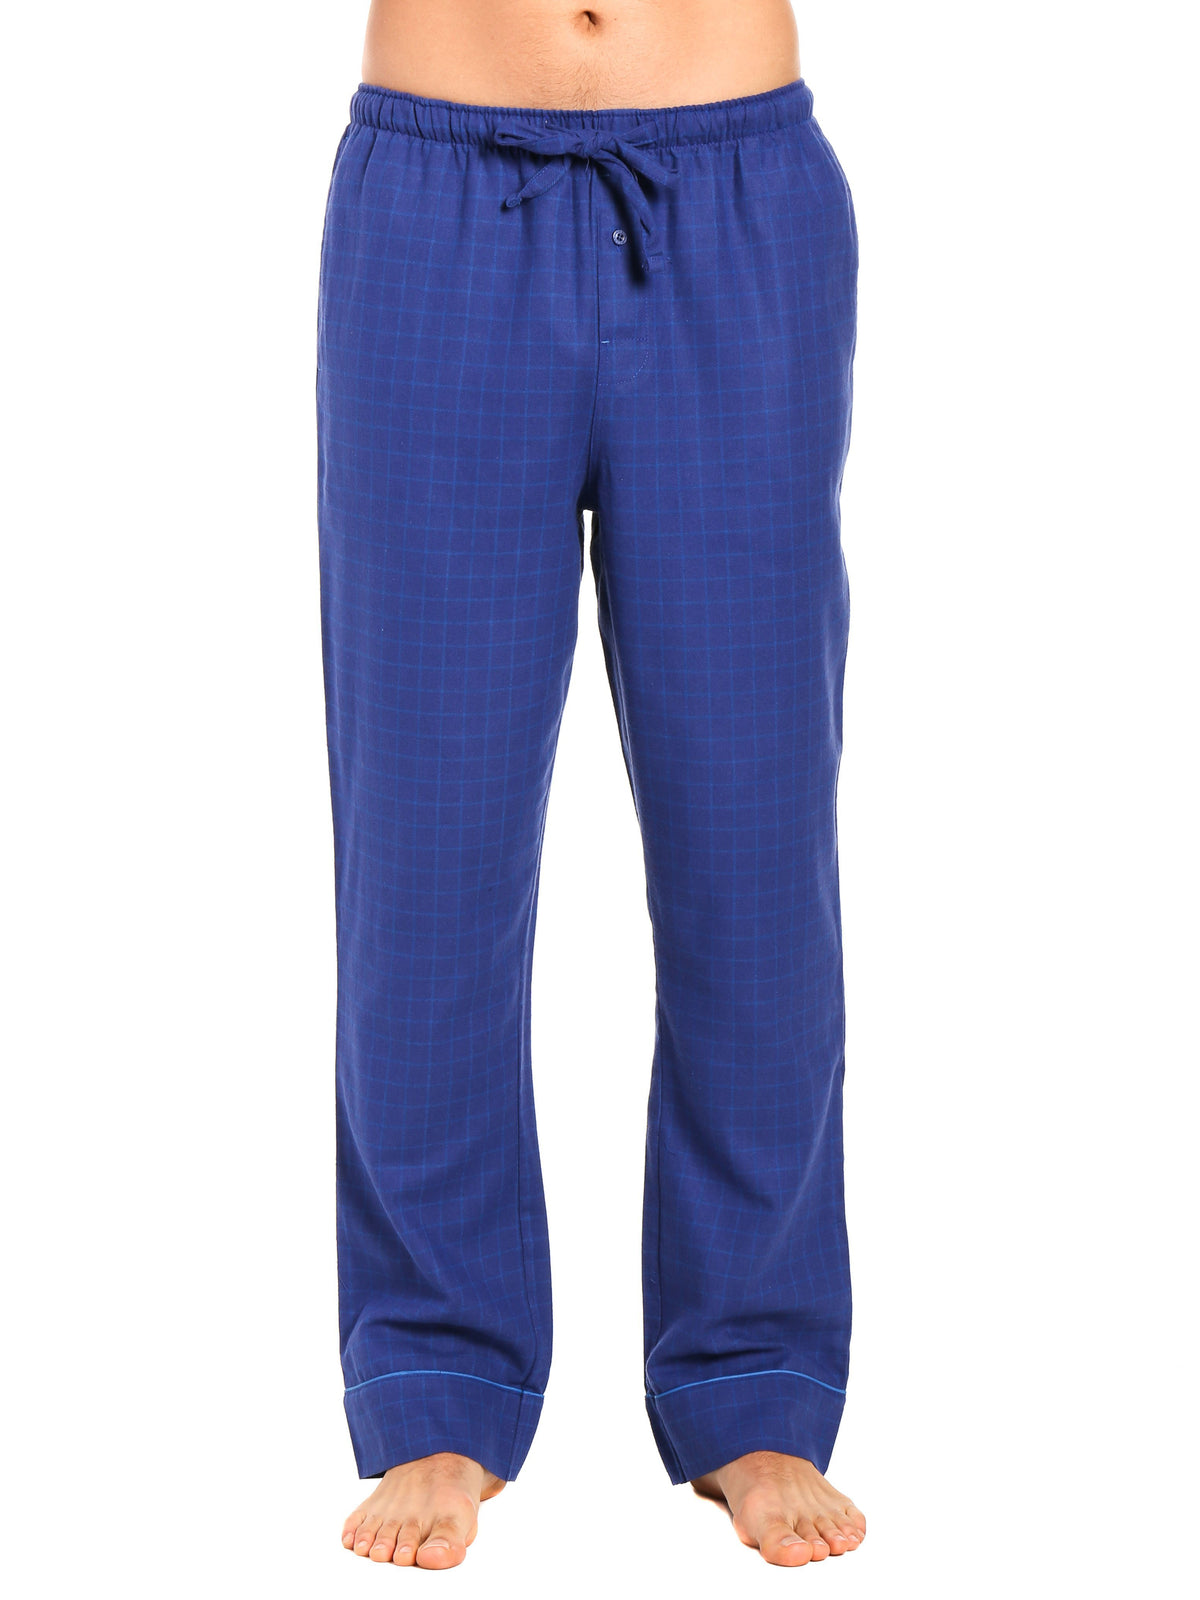 Mens Gingham 100% Cotton Flannel Lounge Pants - Windowpane Checks - Navy Blue